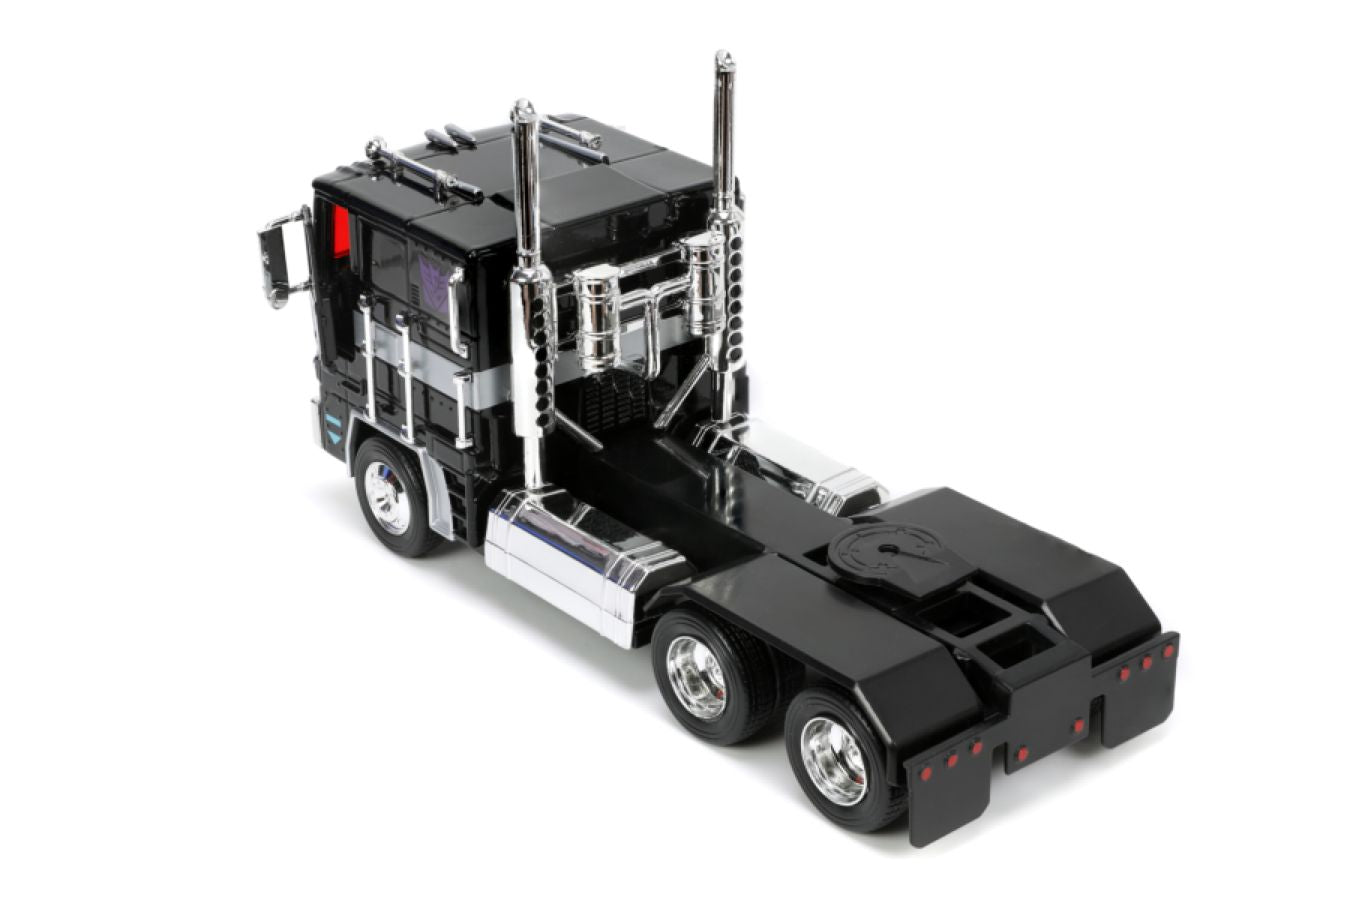 Transformers (TV) - Nemesis Prime Black 1:24 Scale Hollywood Ride